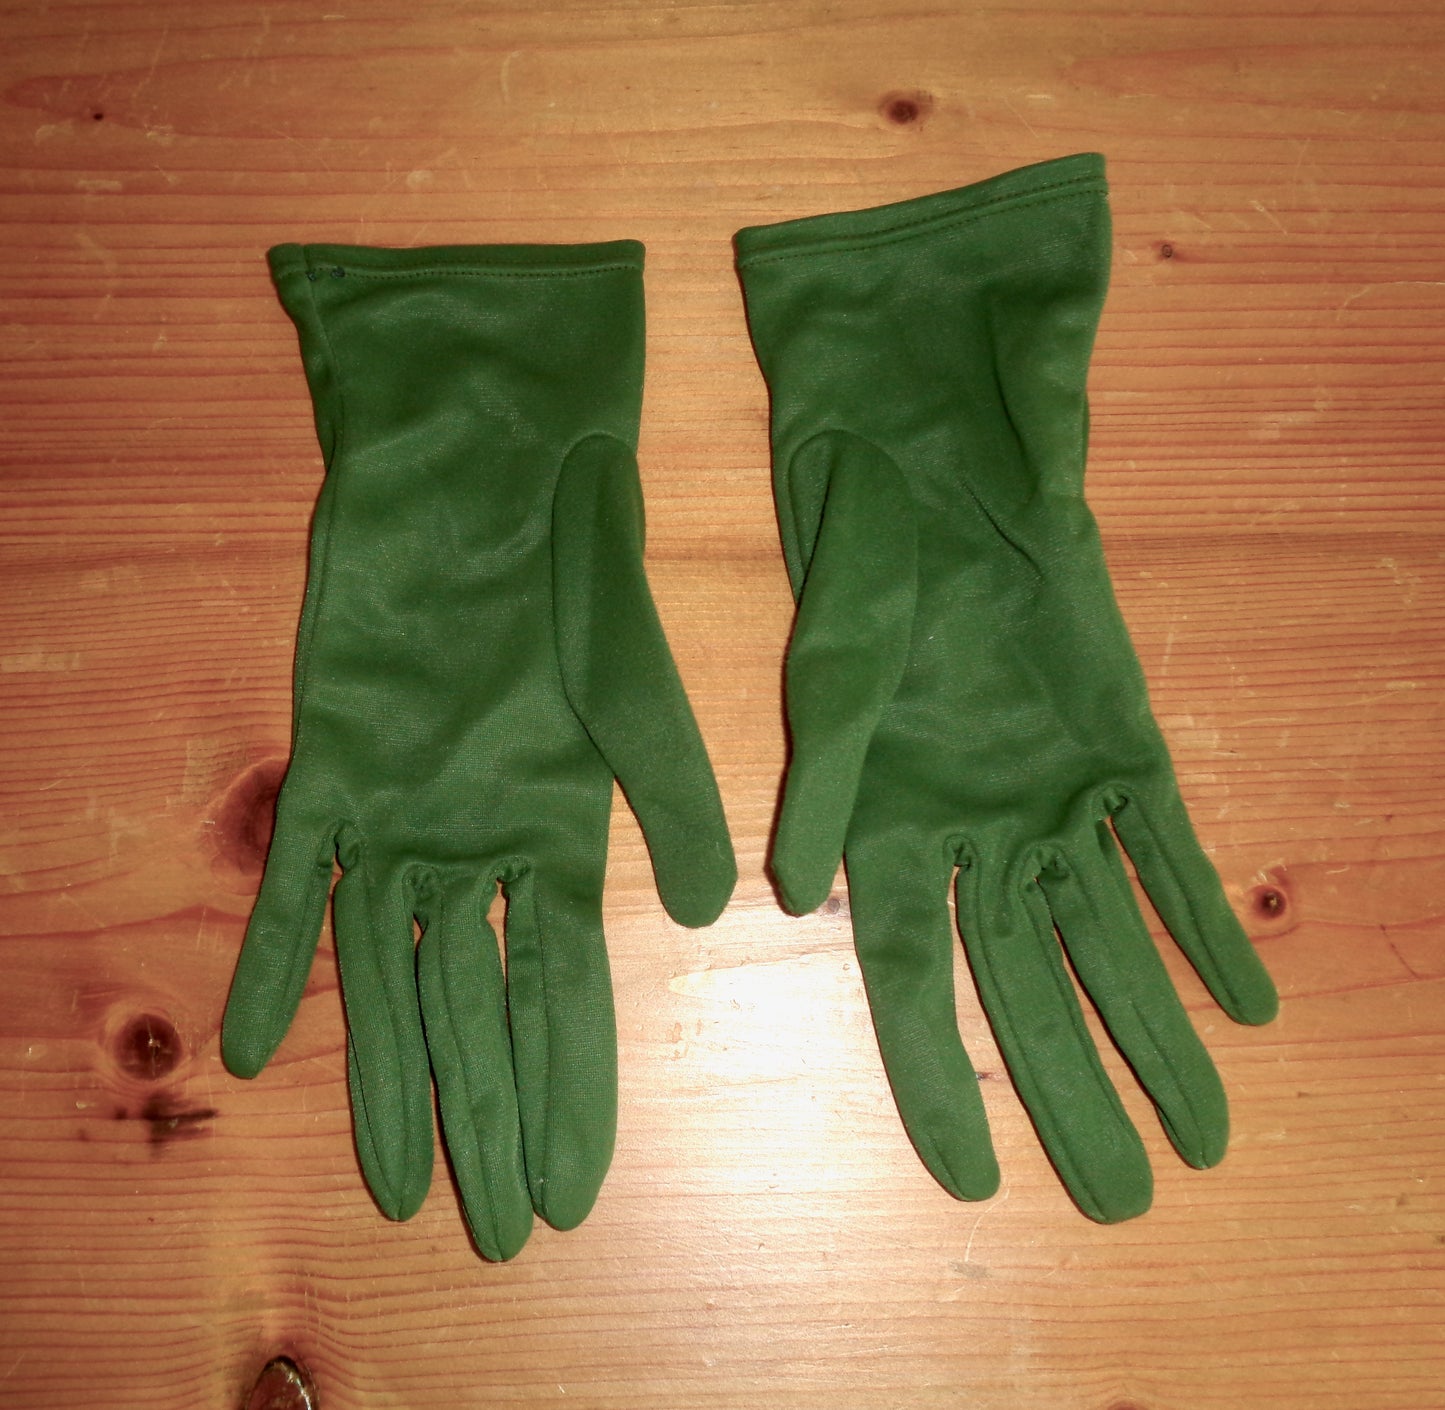 1950s Ladies Gloves Medium Size Wrist Length In Green Nylon